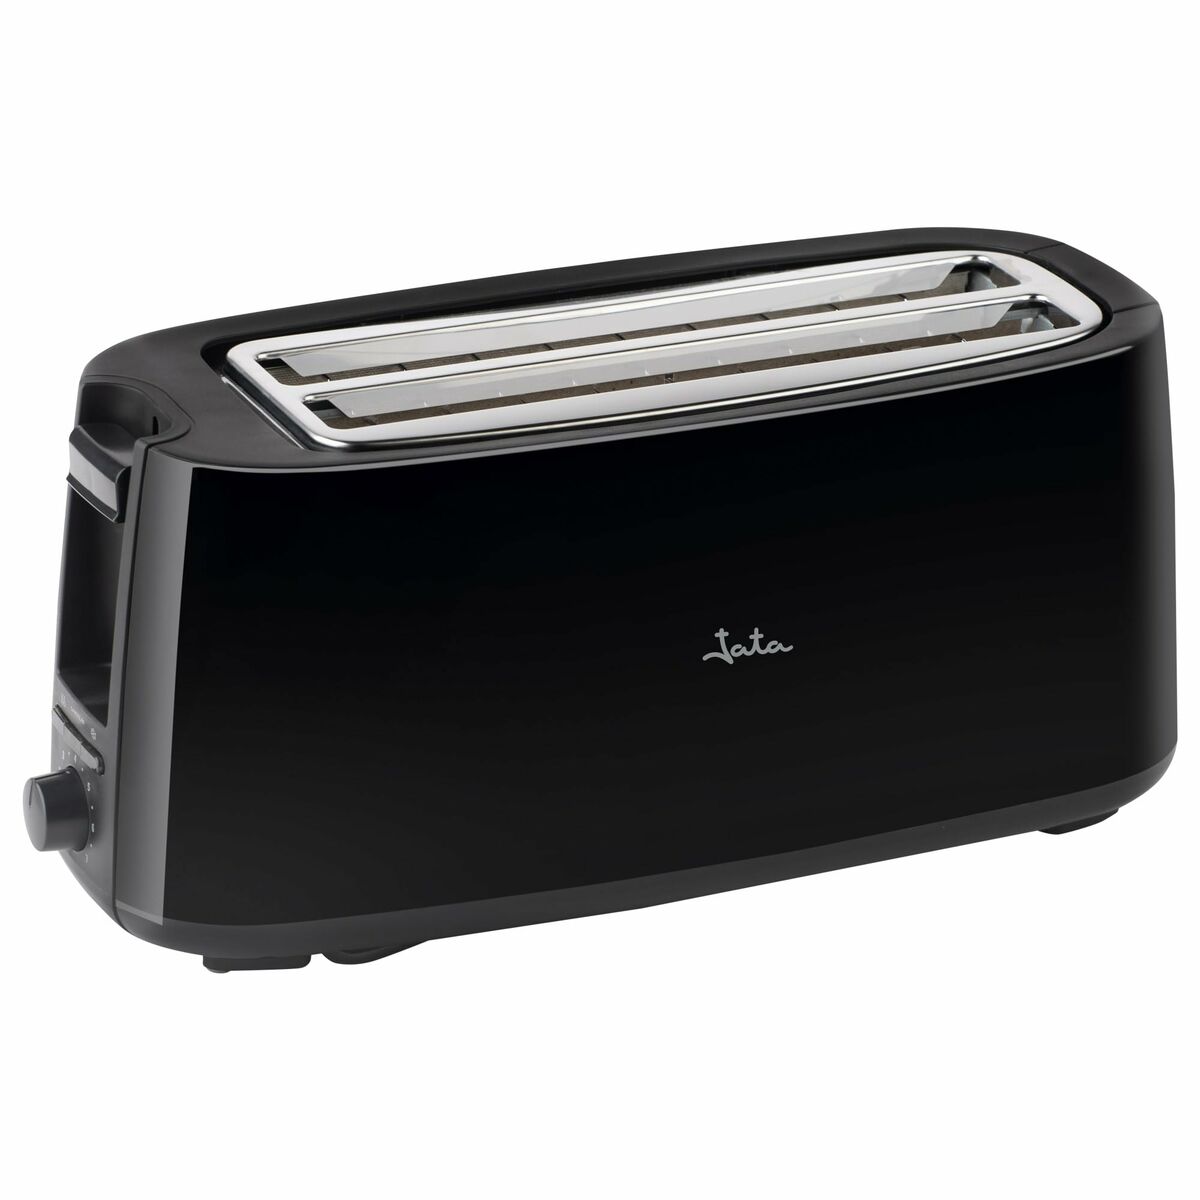 Toaster JATA JETT1585 1400 W - CA International  